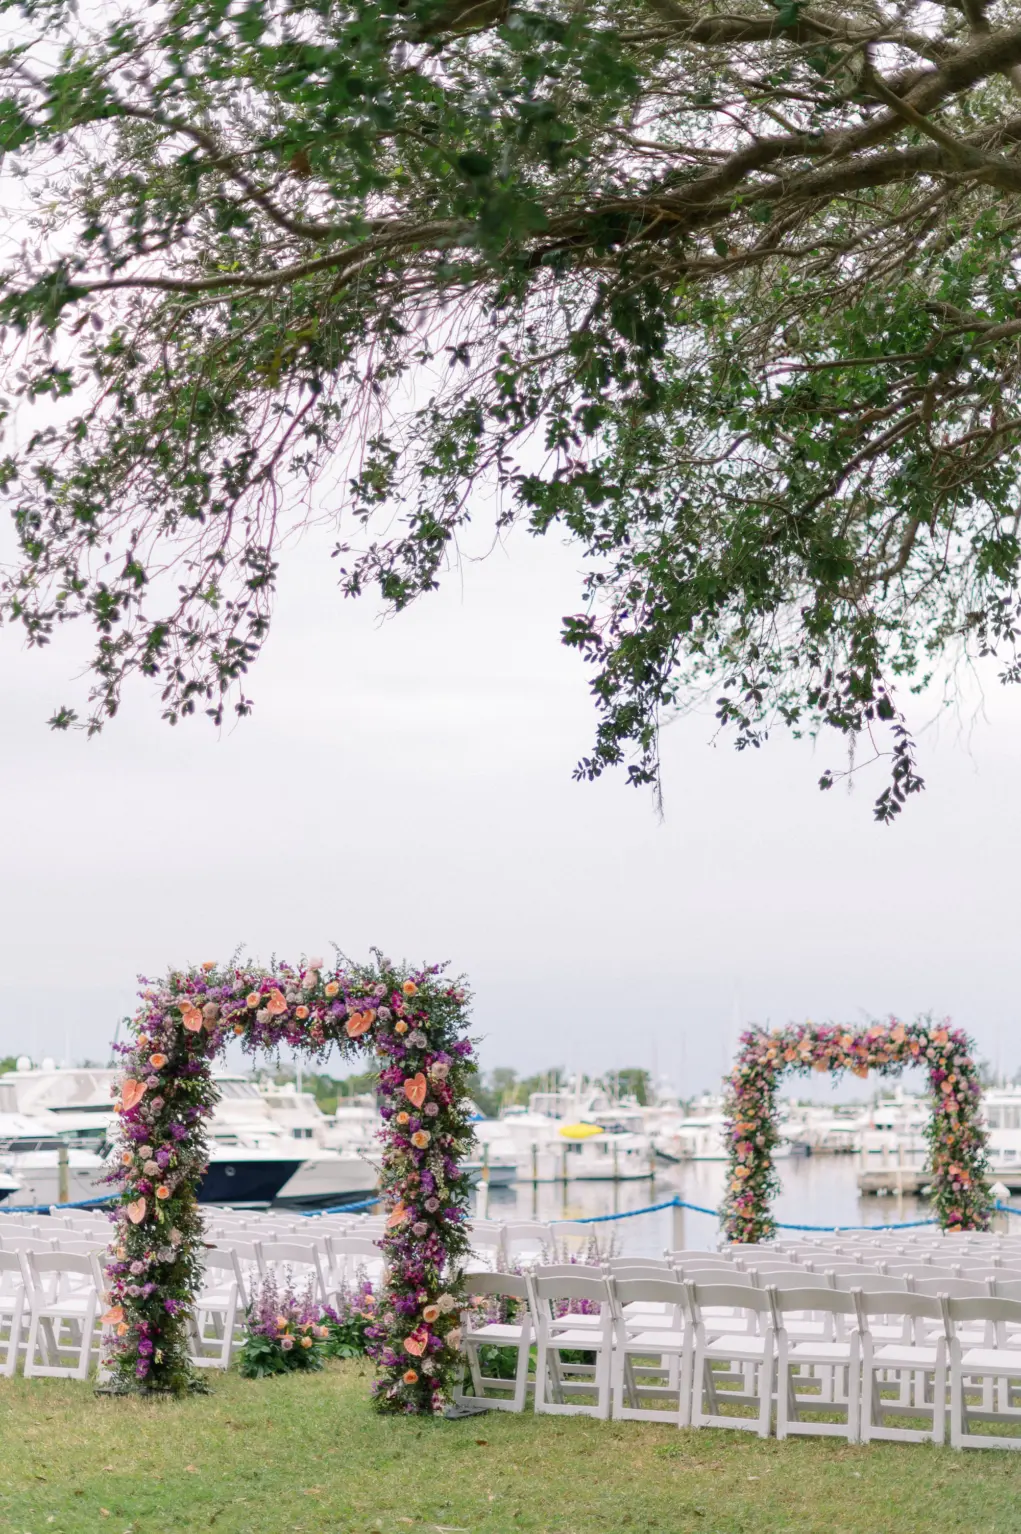 Tropical Floral Aisle Arch Inspiration | Orange Anthurium, Pink Roses, Purple Foxglove Flowers, and Greenery | Waterfront Wedding Ceremony Ideas | Folding Garden Chairs | Sarasota Florist Botanica International Design Studio